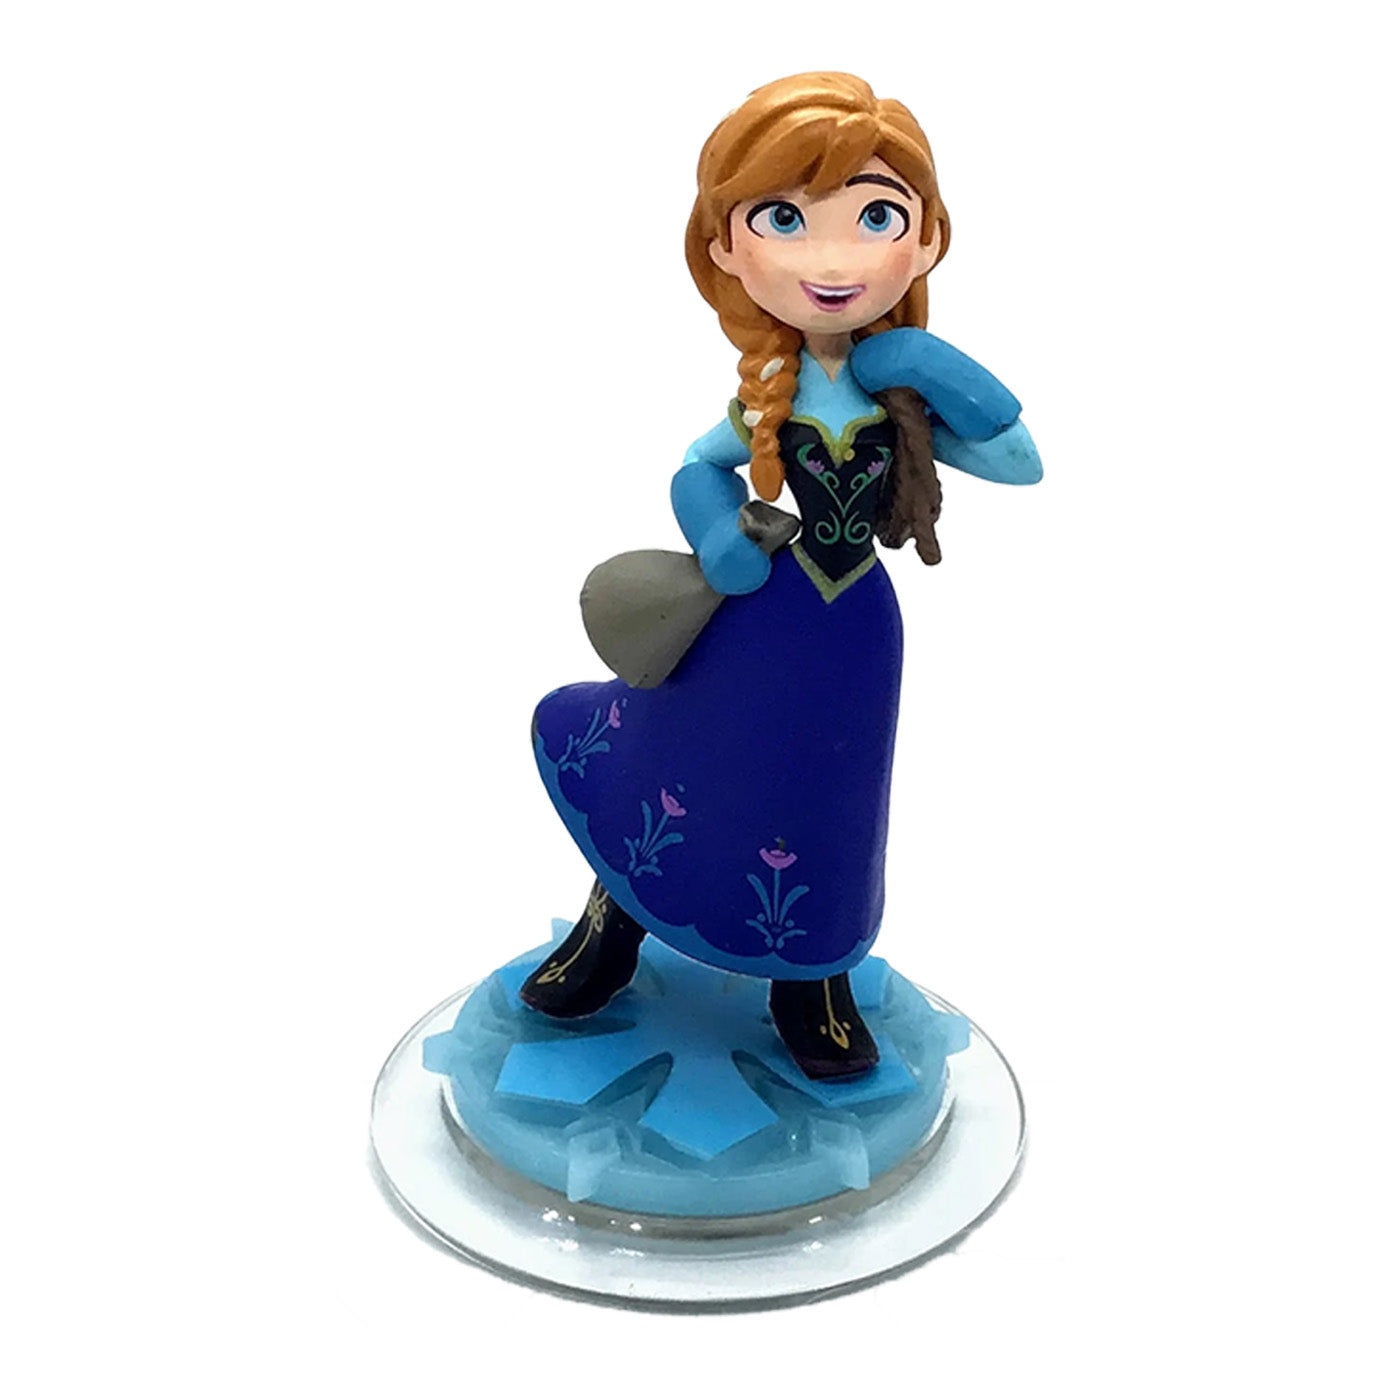 Disney Infinity 1.0 Character: Anna